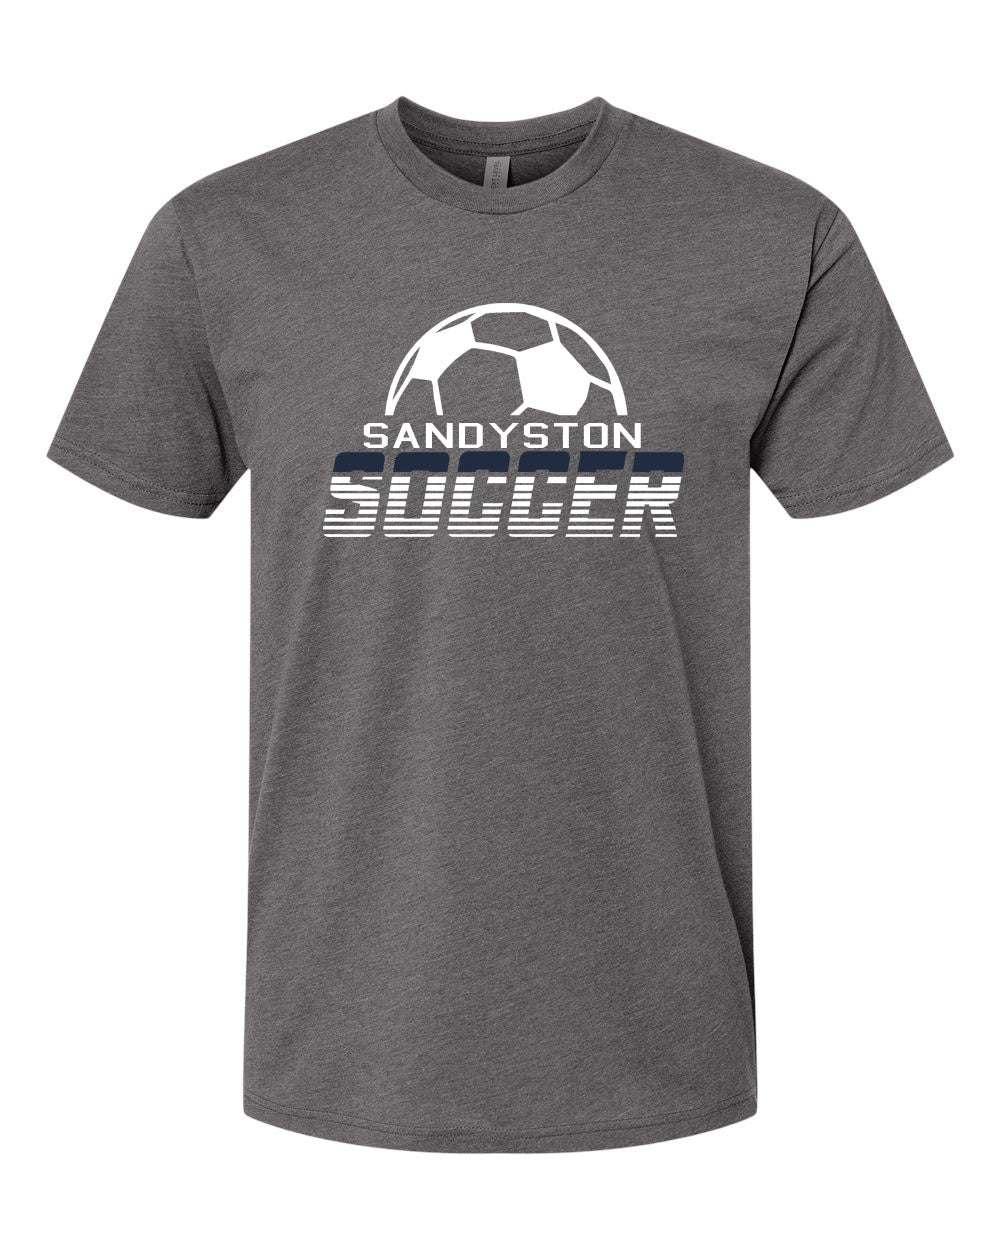 Sandyston Soccer design 3 T-Shirt